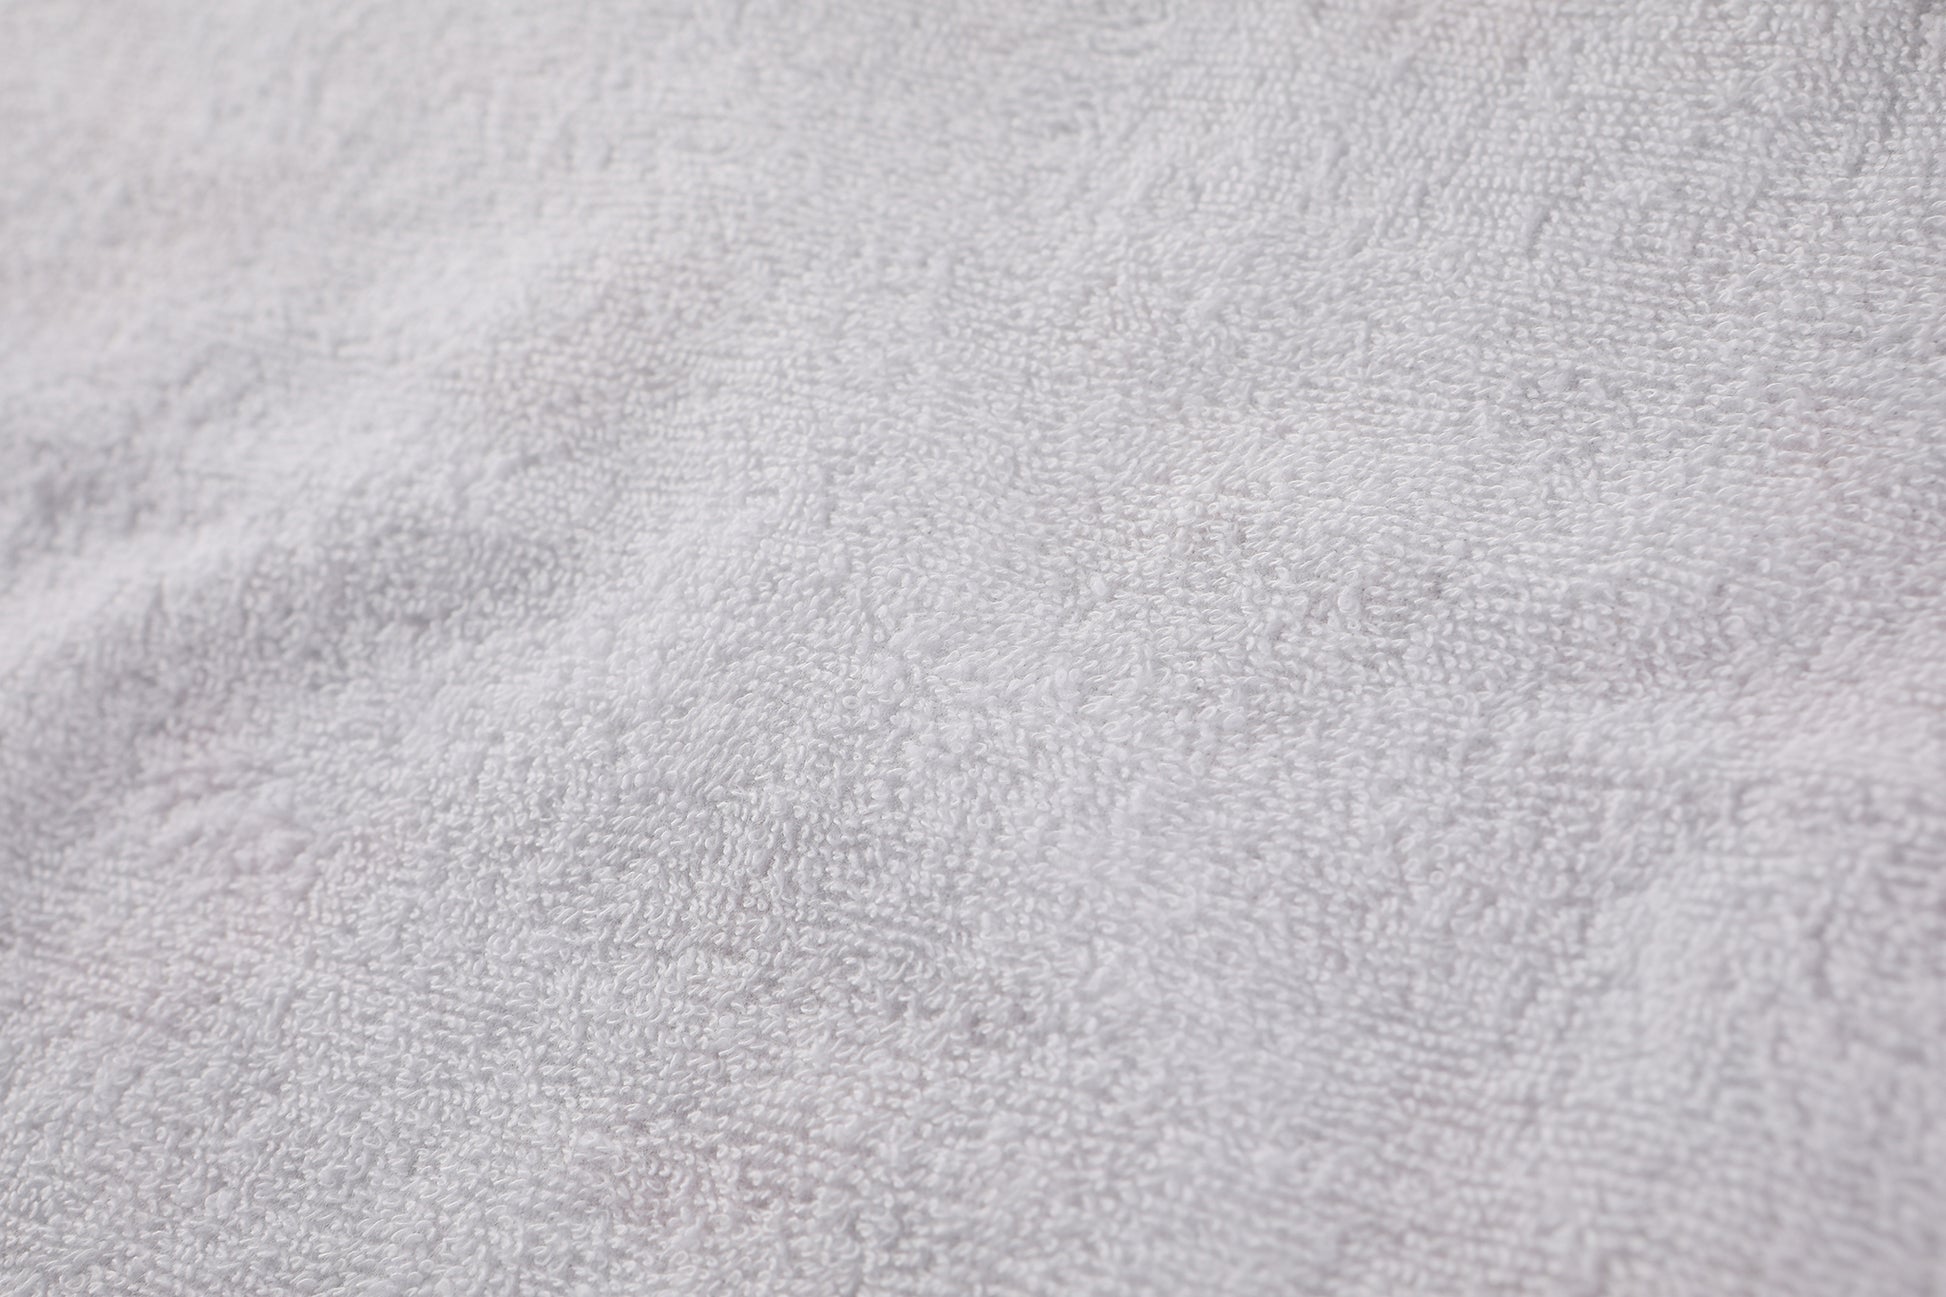 Closeup of white terrycloth lining.